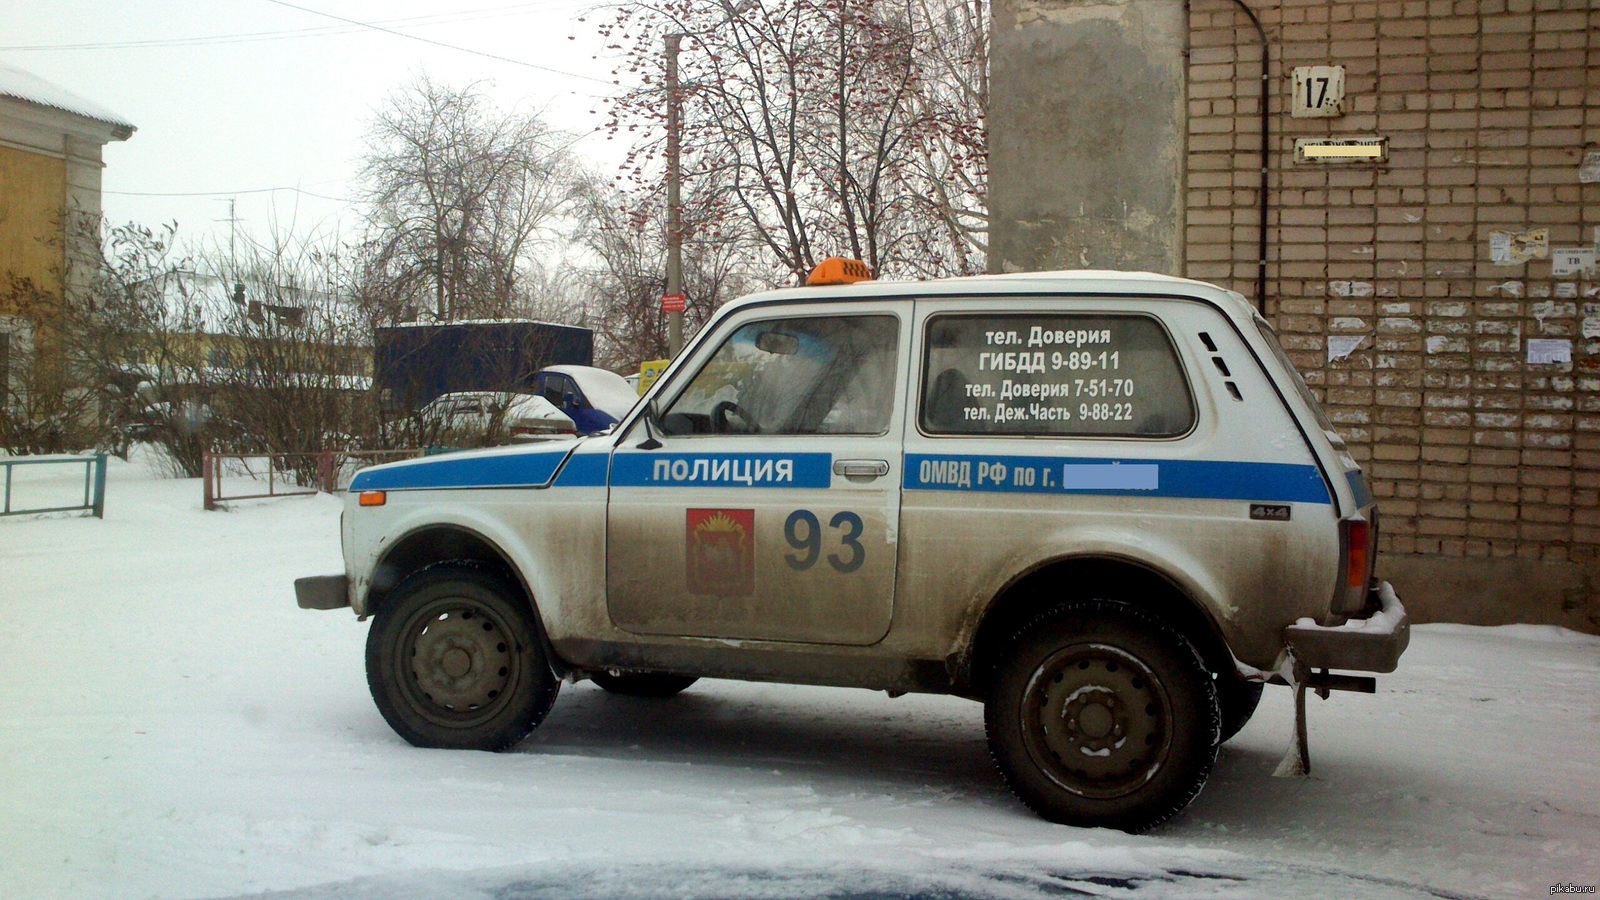 Такси такса телефон. Такси вези Николаев. Такси полиция. Такси такси вези. Такси такси вези вези вдоль ночных дорог.